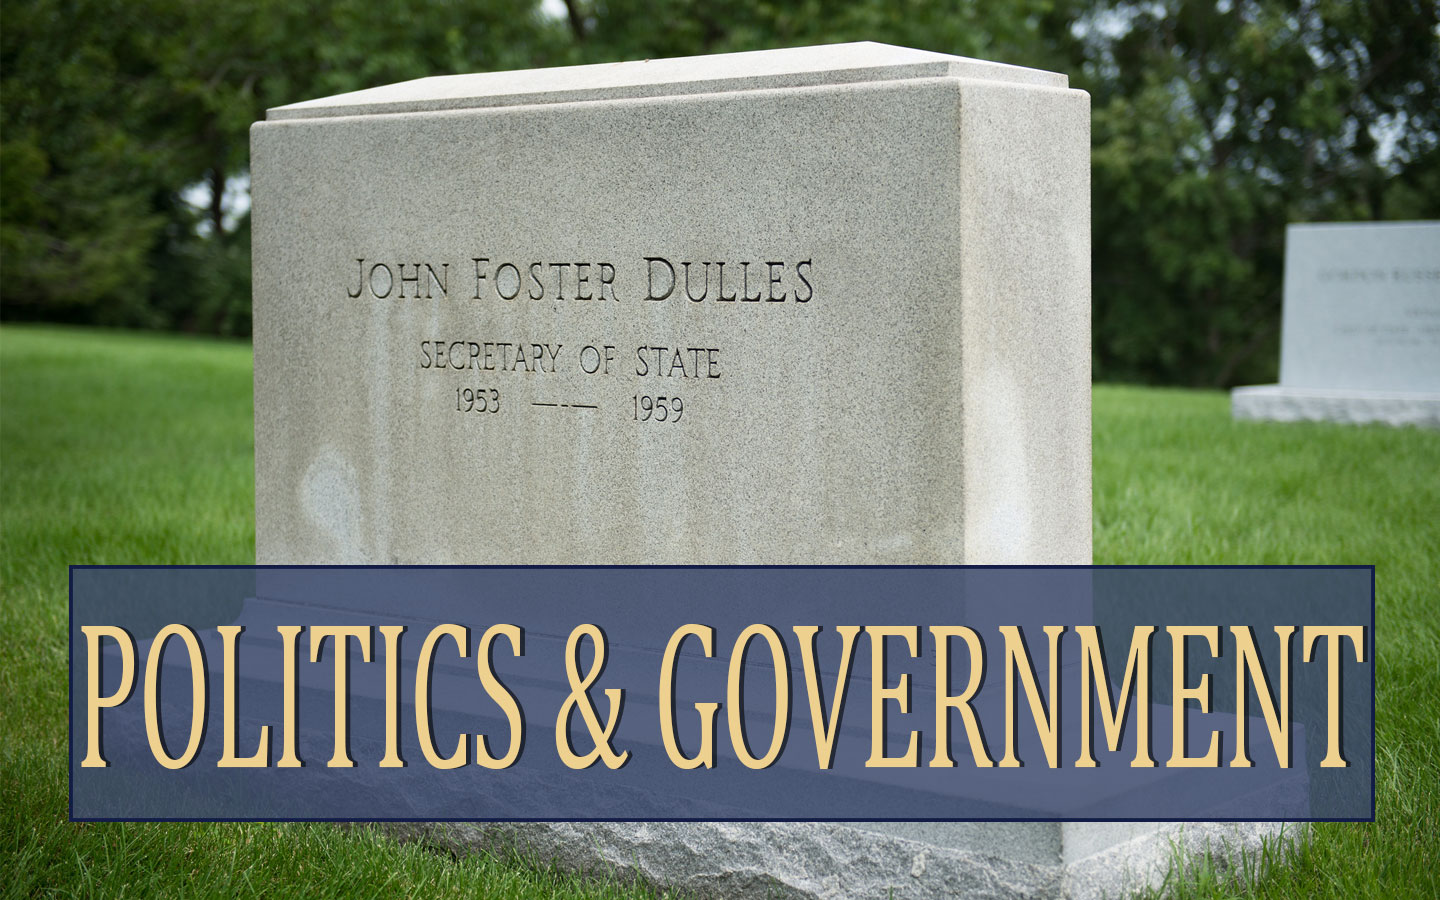 Political figures at Arlington National Cemetery